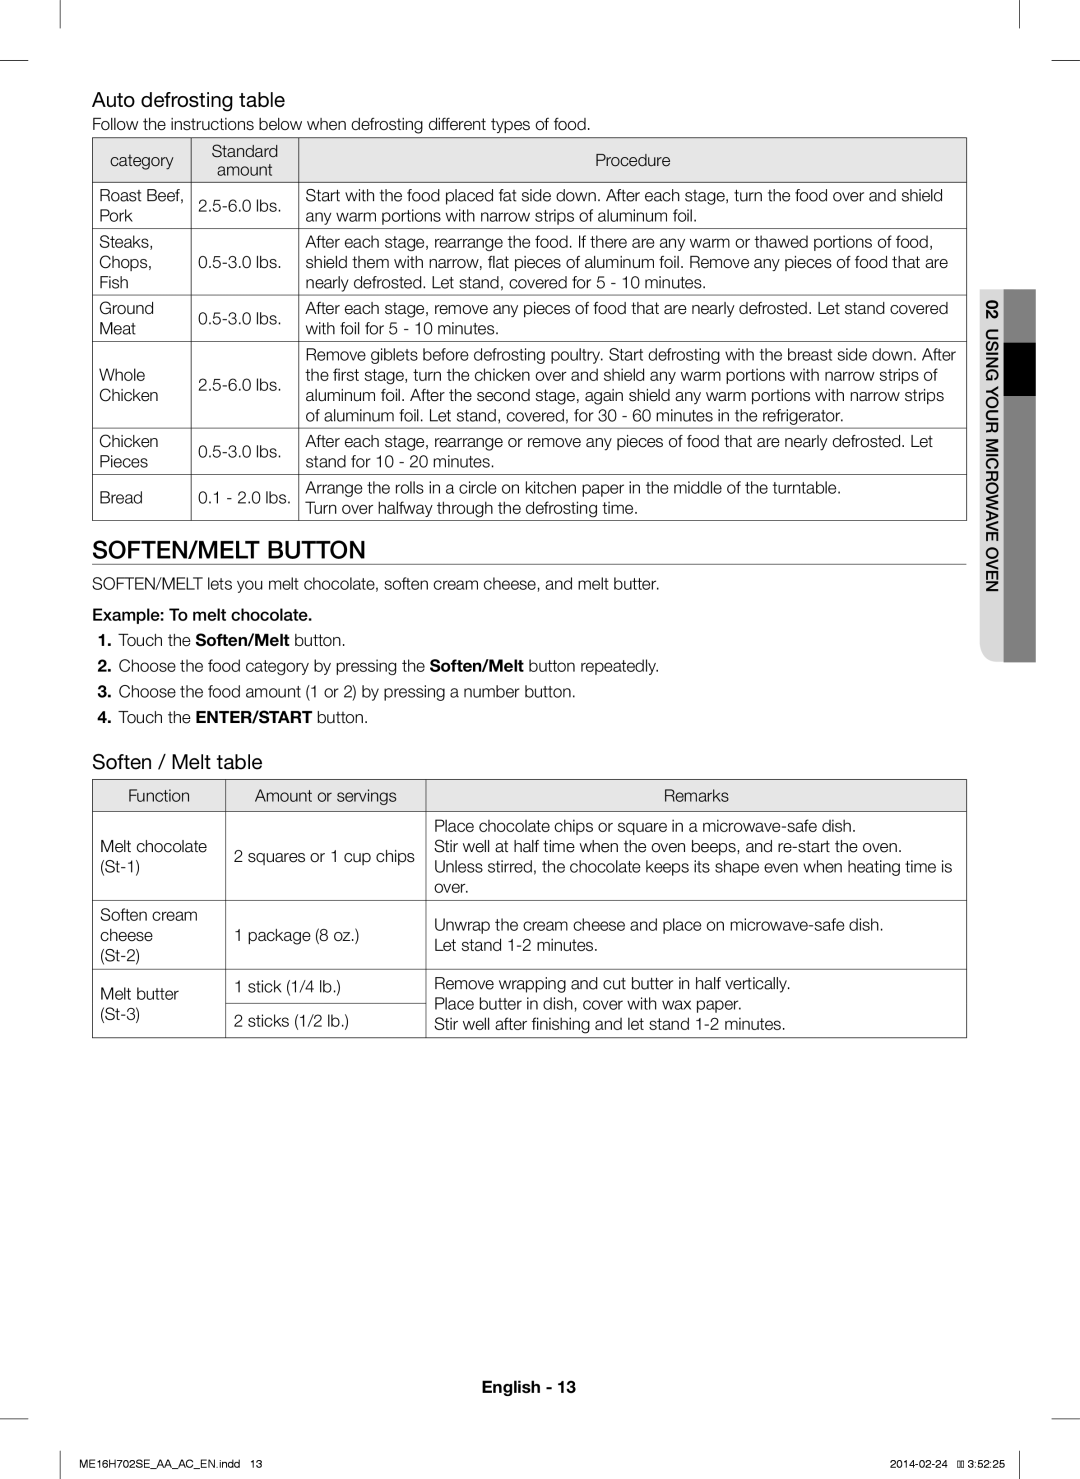 Samsung ME16H702SE user manual Soften/Melt Button, Auto defrosting table, Soften / Melt table, English 